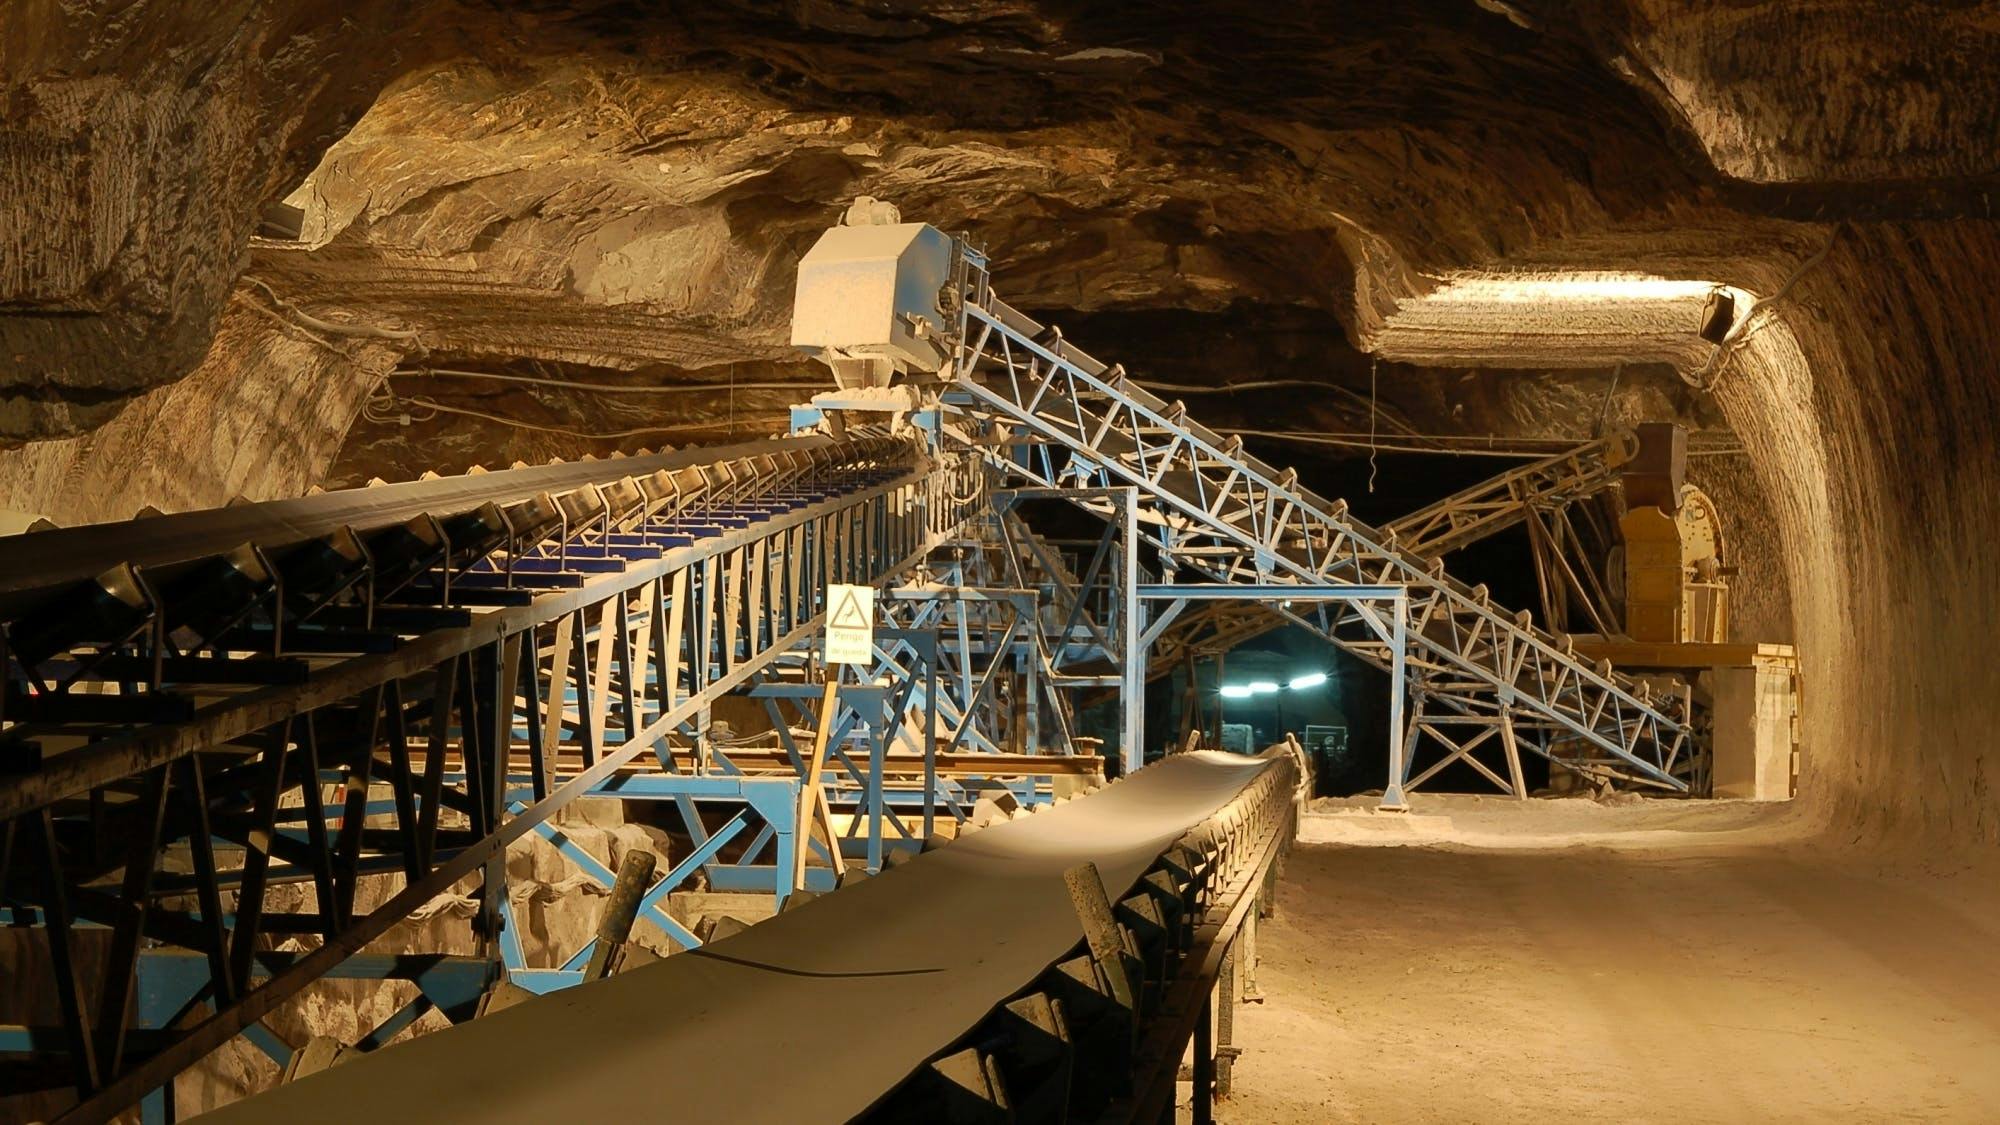 Visita guiada a las minas de sal de Loulé Rock